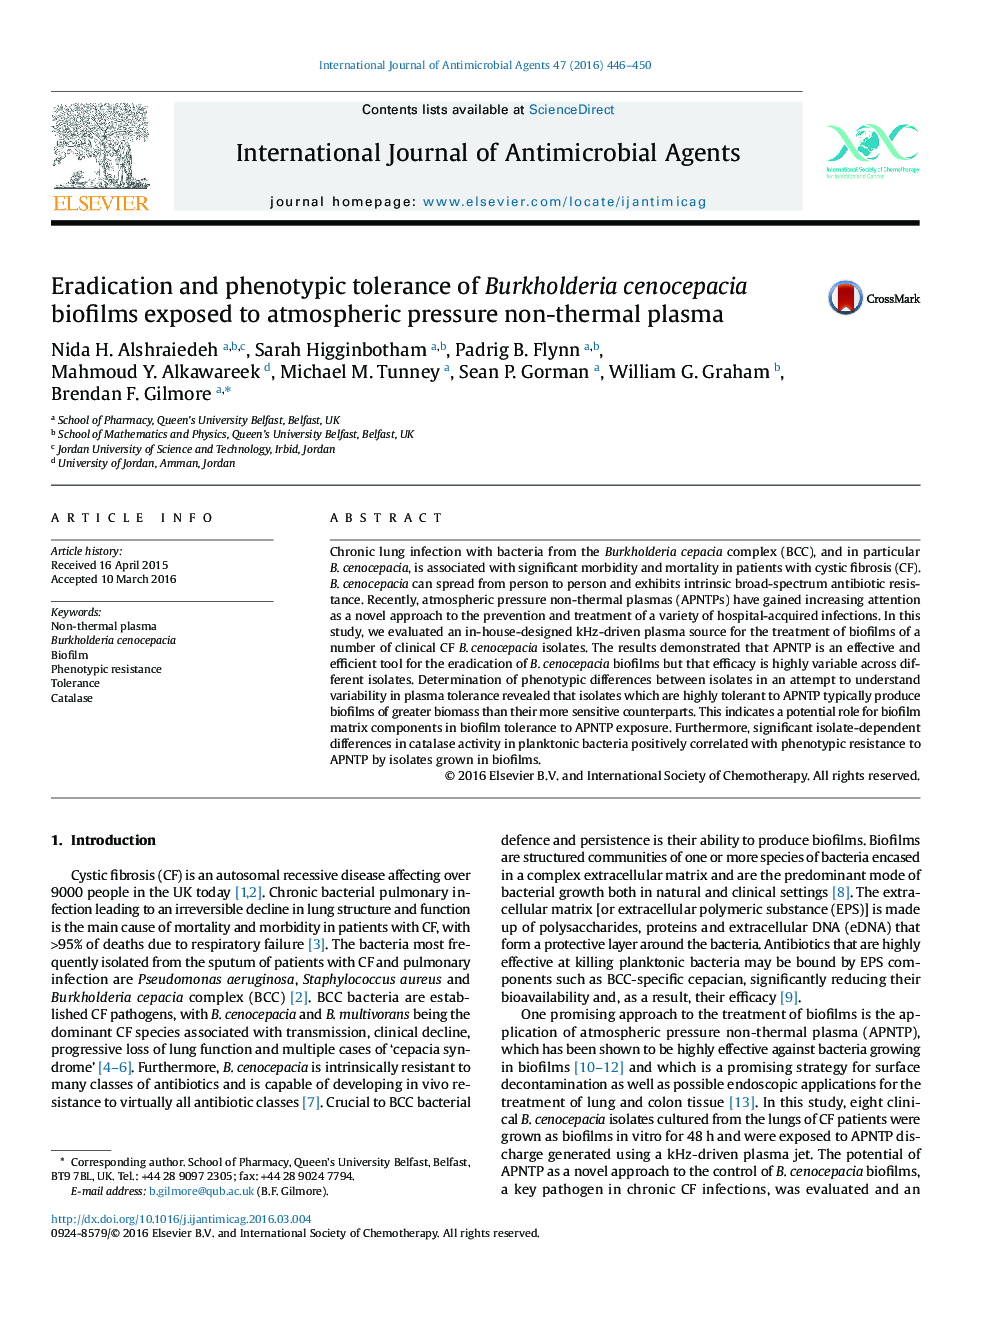 Eradication and phenotypic tolerance of Burkholderia cenocepacia biofilms exposed to atmospheric pressure non-thermal plasma